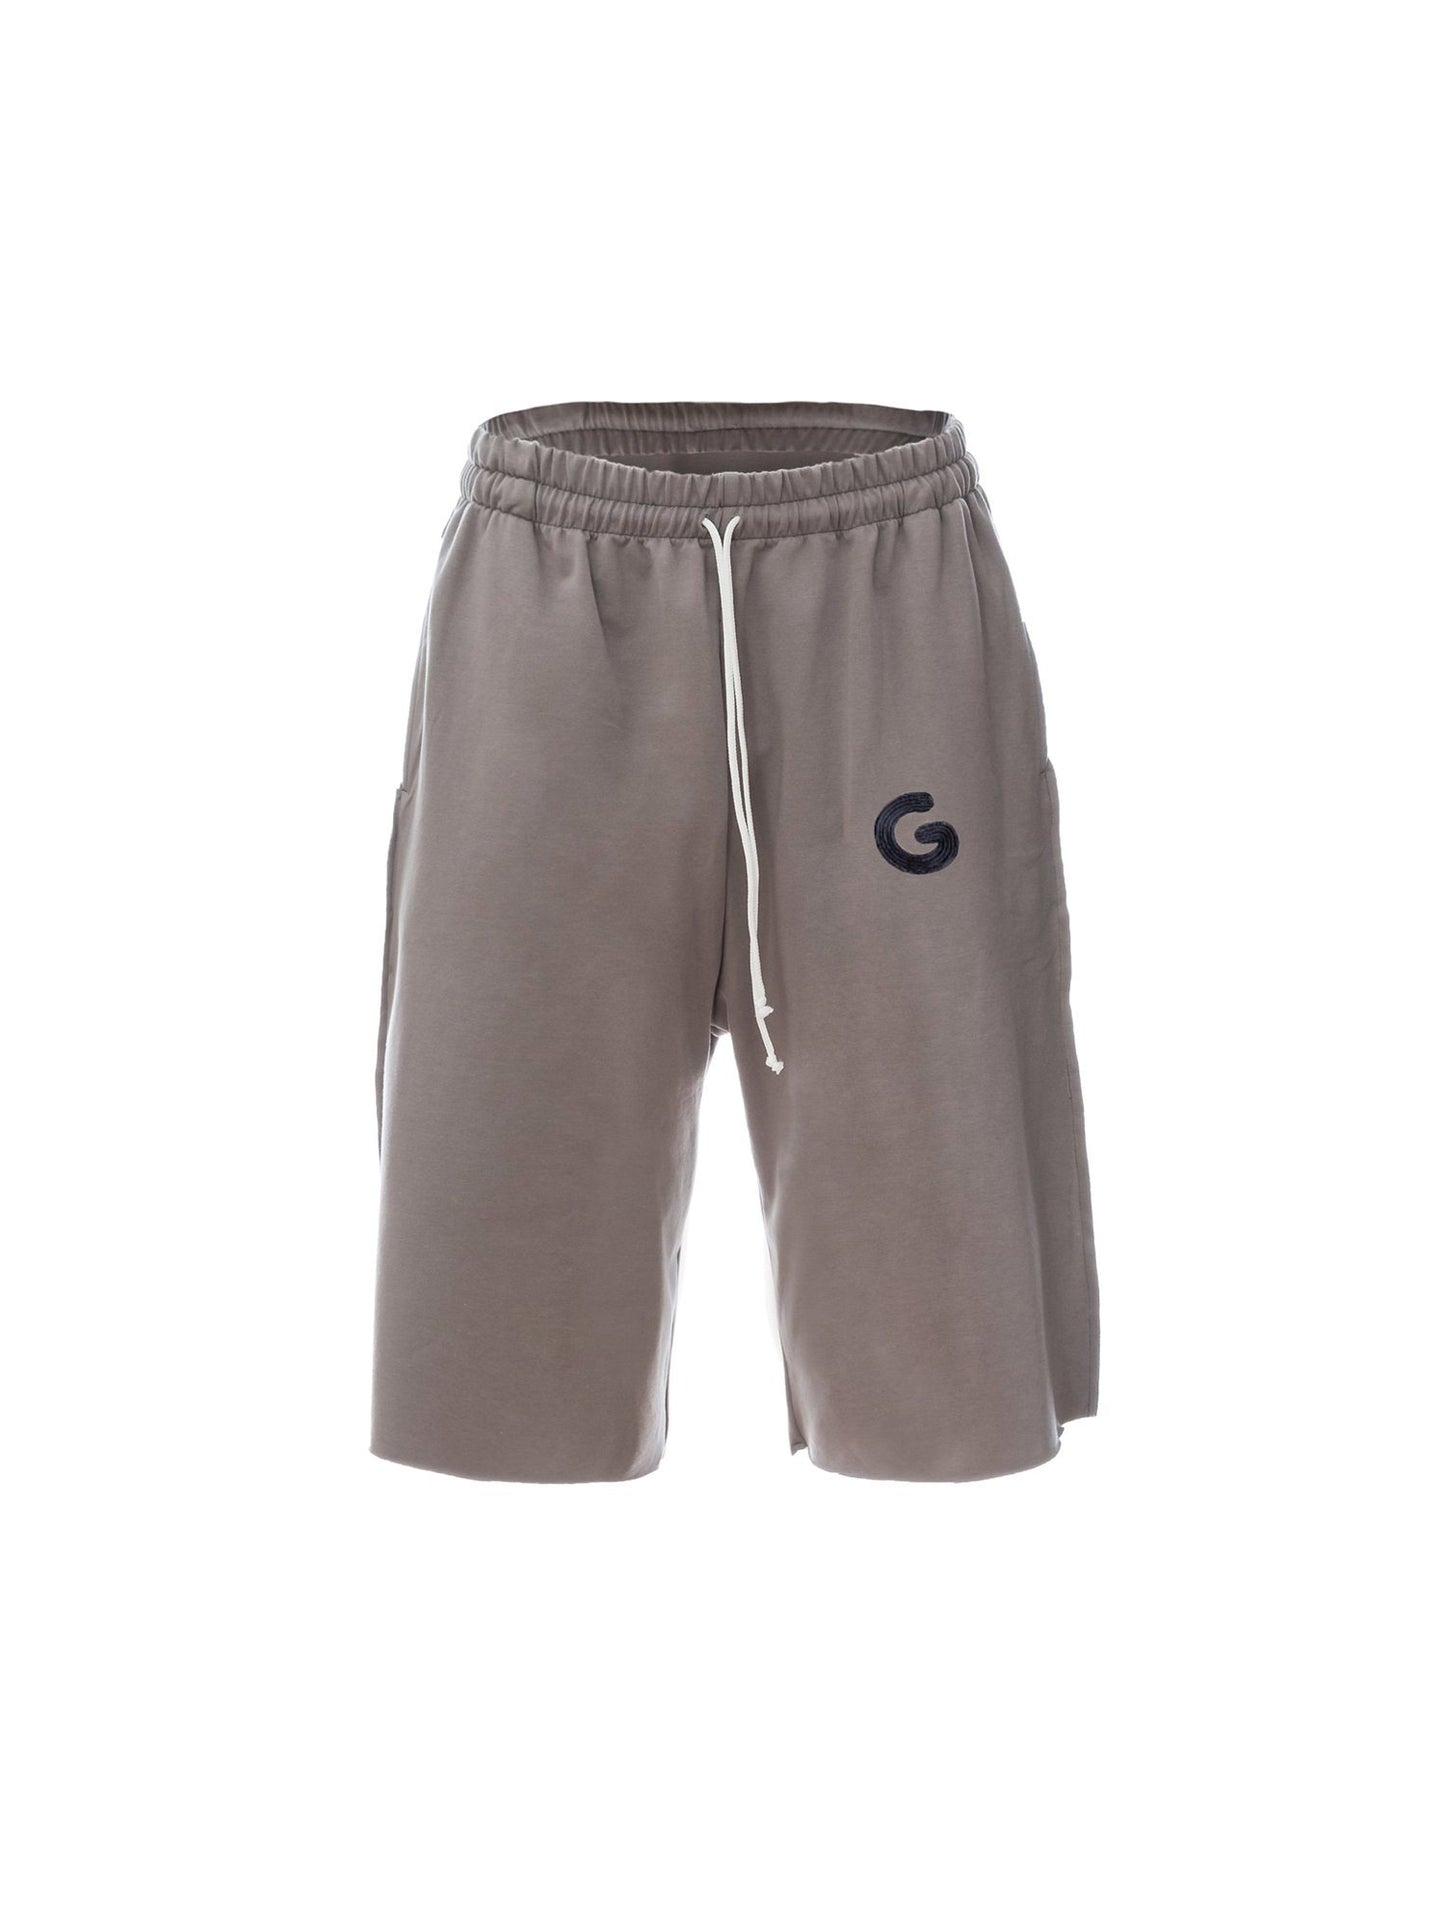 TheG Essential Shorts // neutrálne